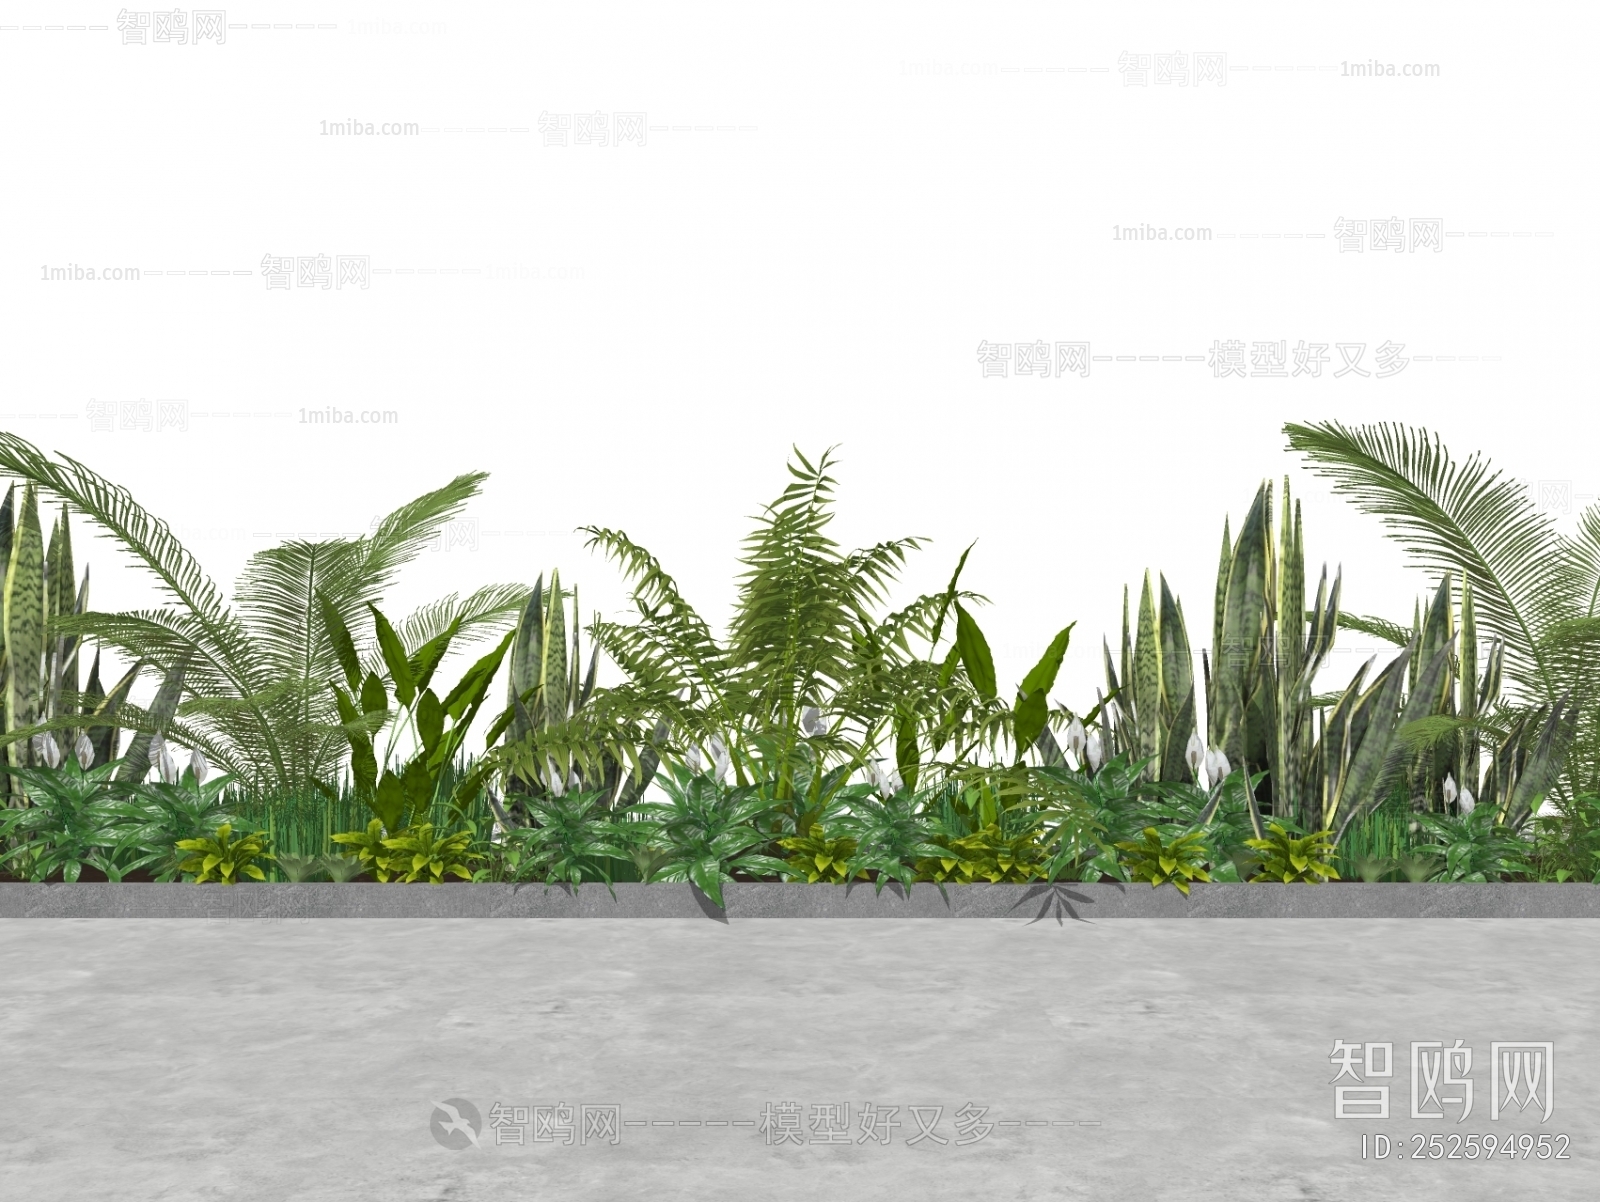 Modern Plant Landscaping